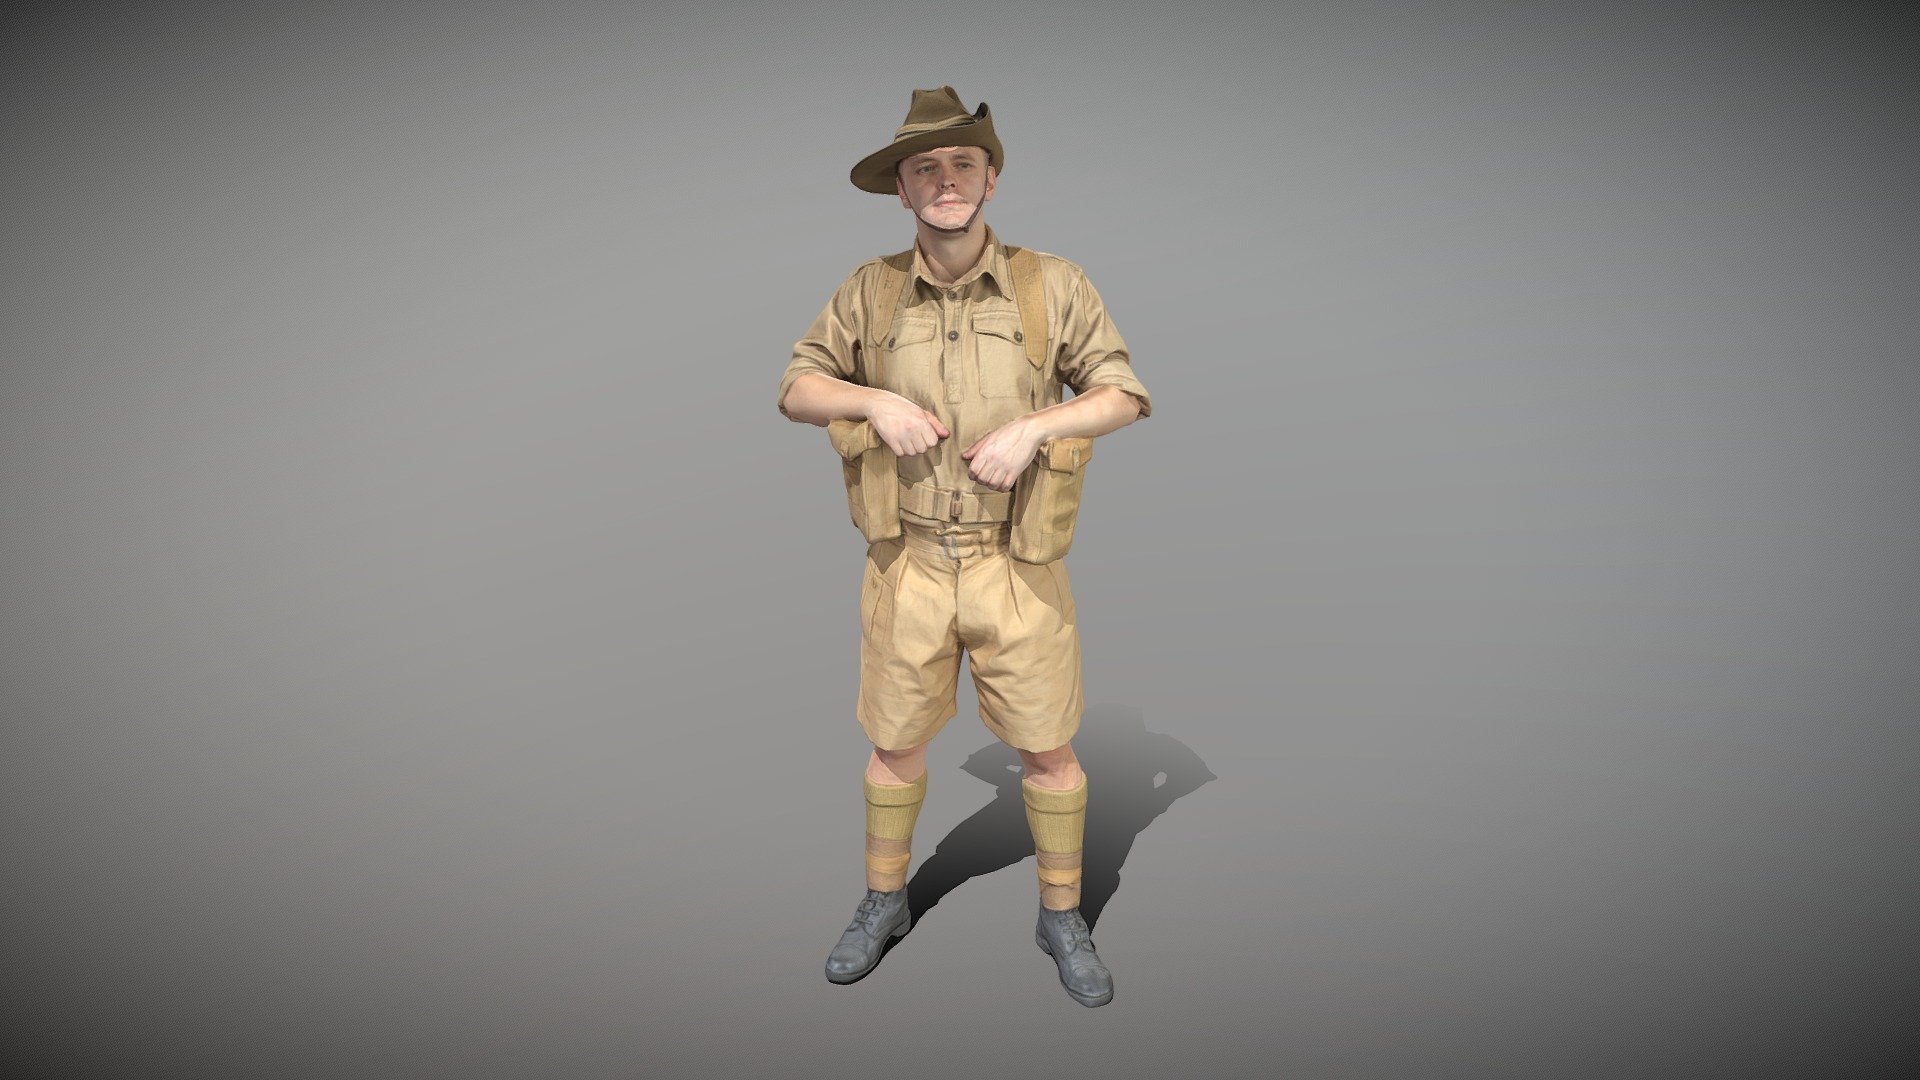 Australian infantryman from World War II 57